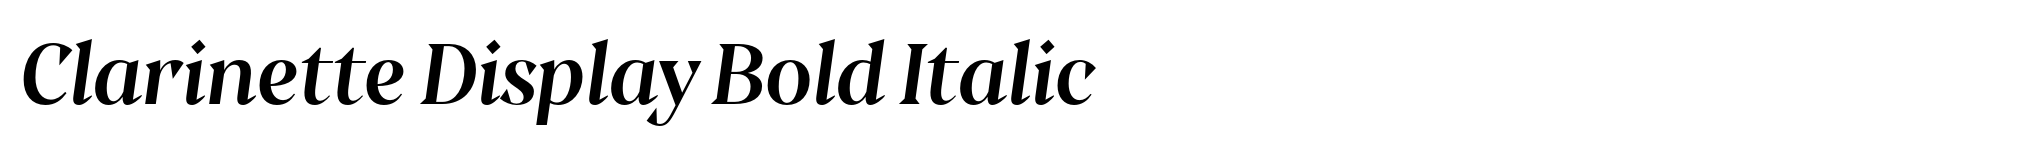 Clarinette Display Bold Italic image